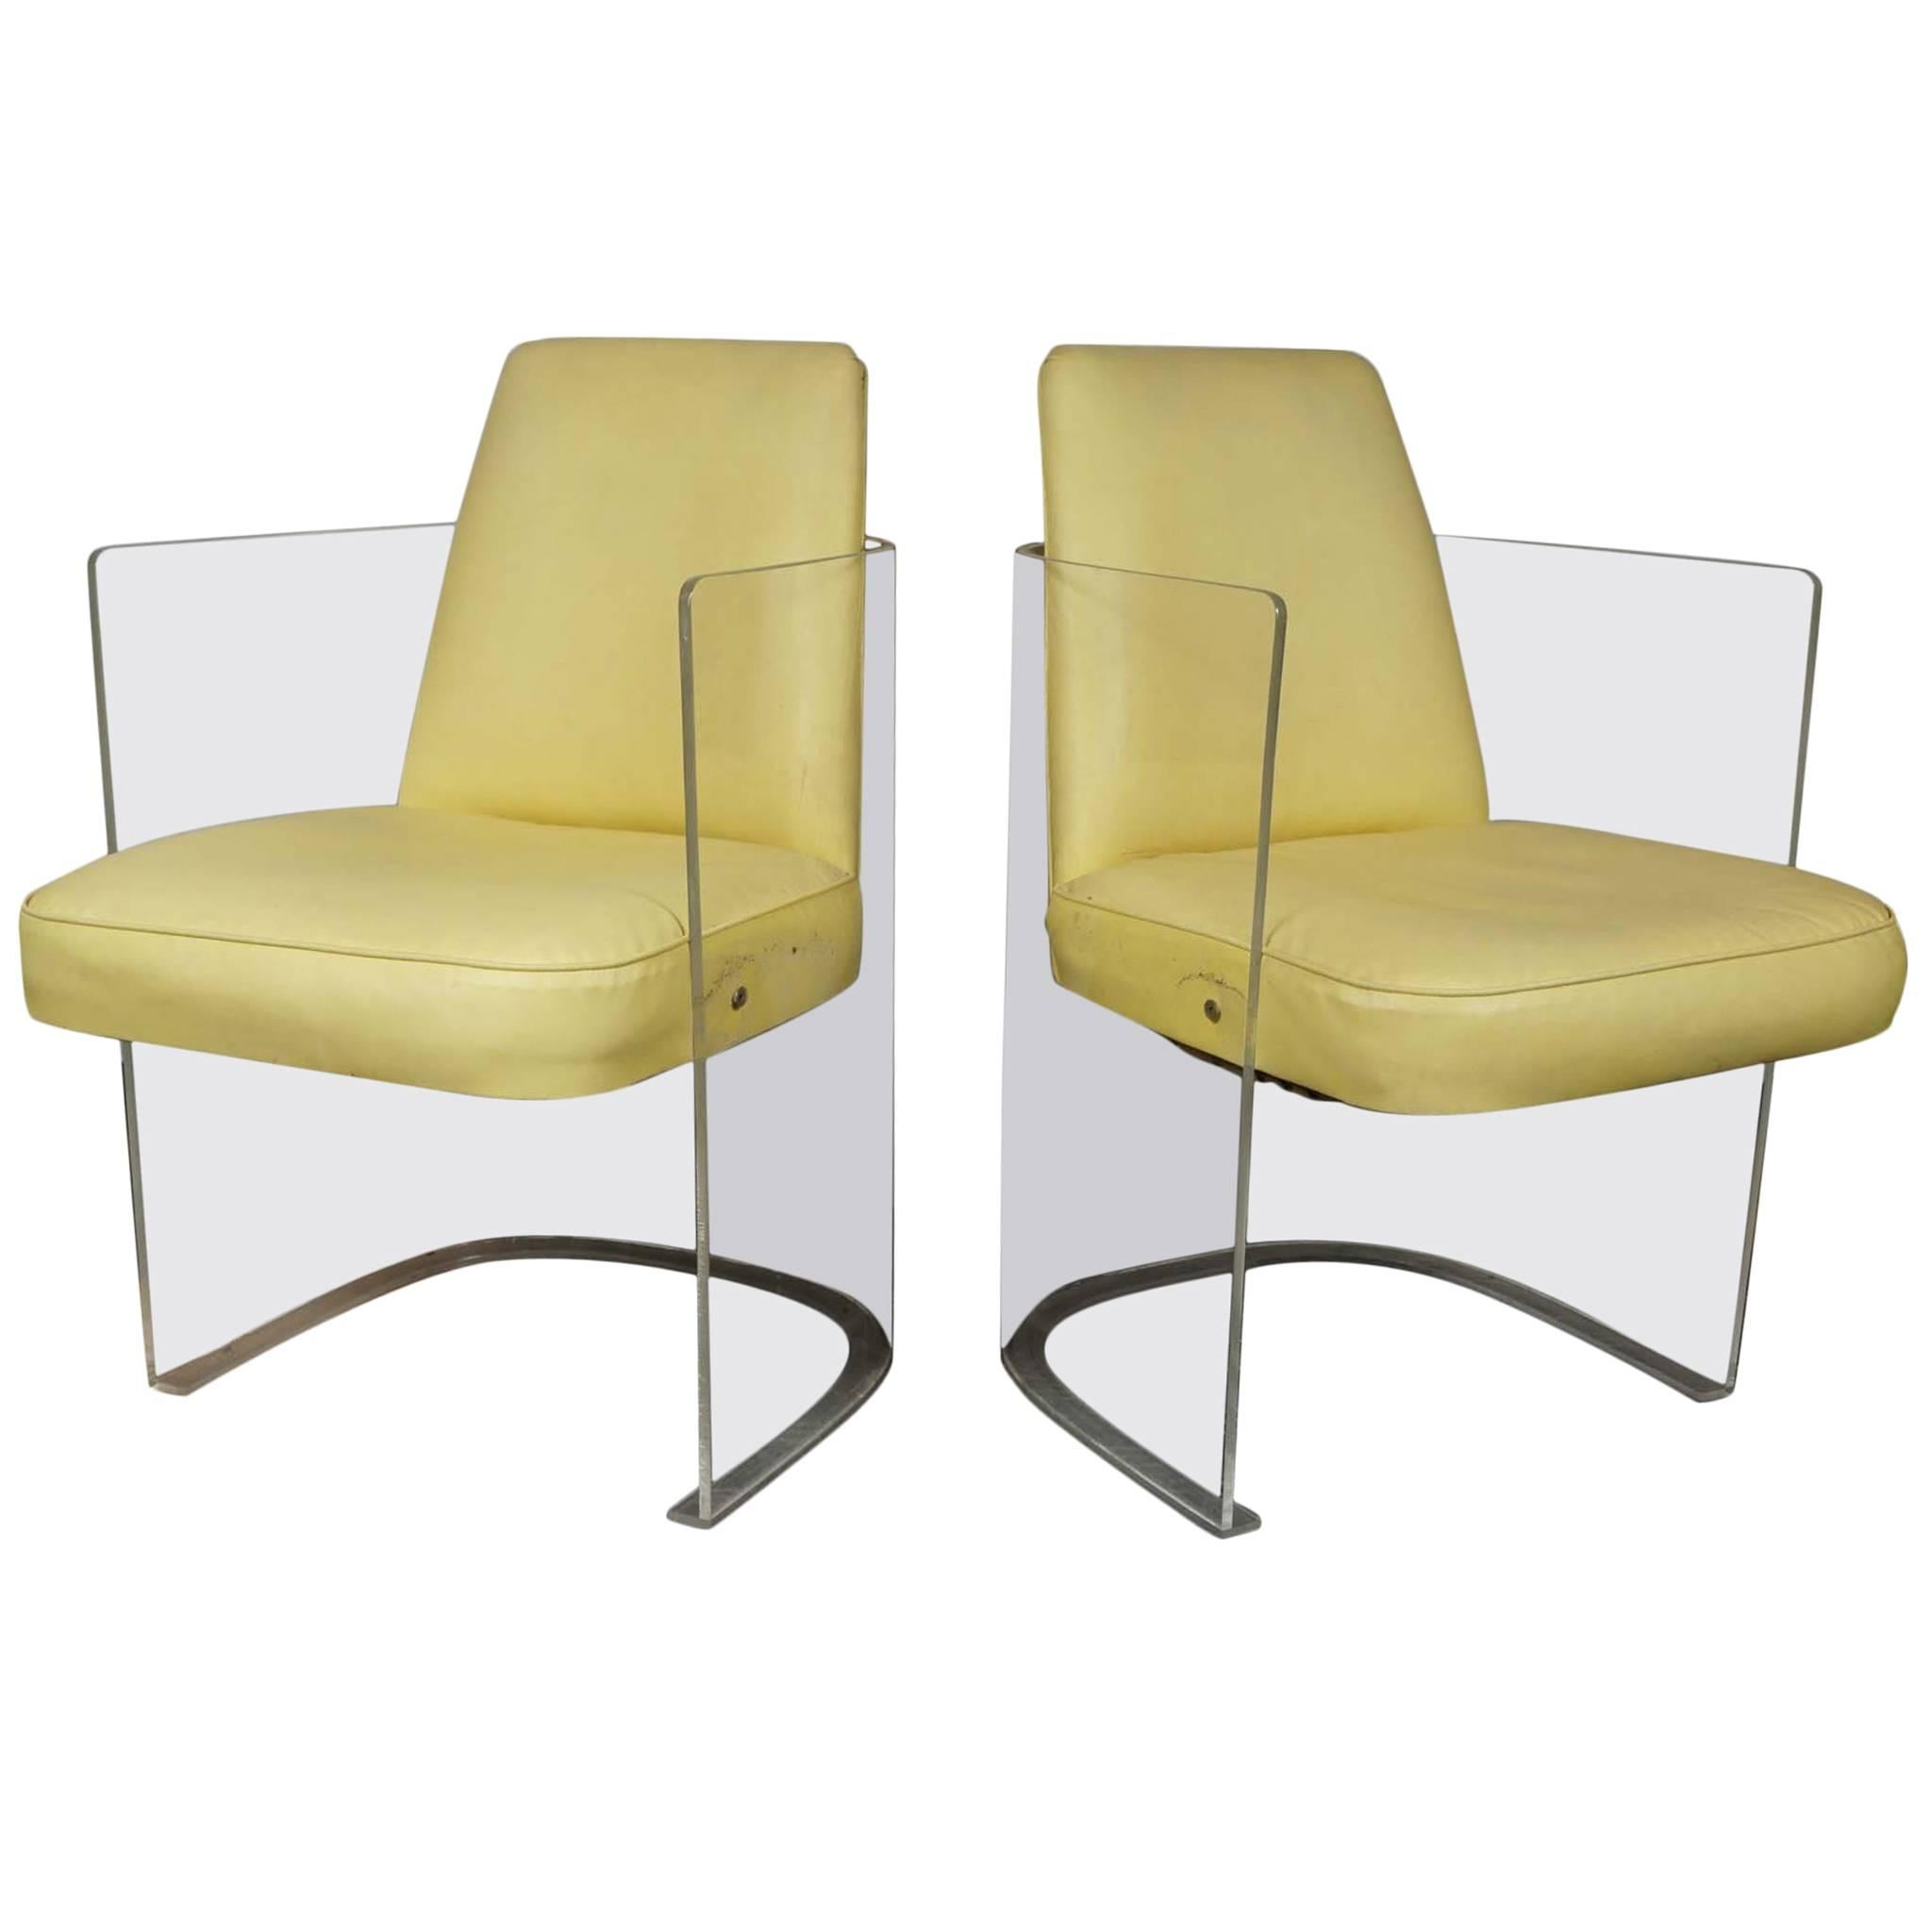 Pair of Lemon Plexiglass and Vinyl Mid-Century Modern Chairs by Vladimir Kagan